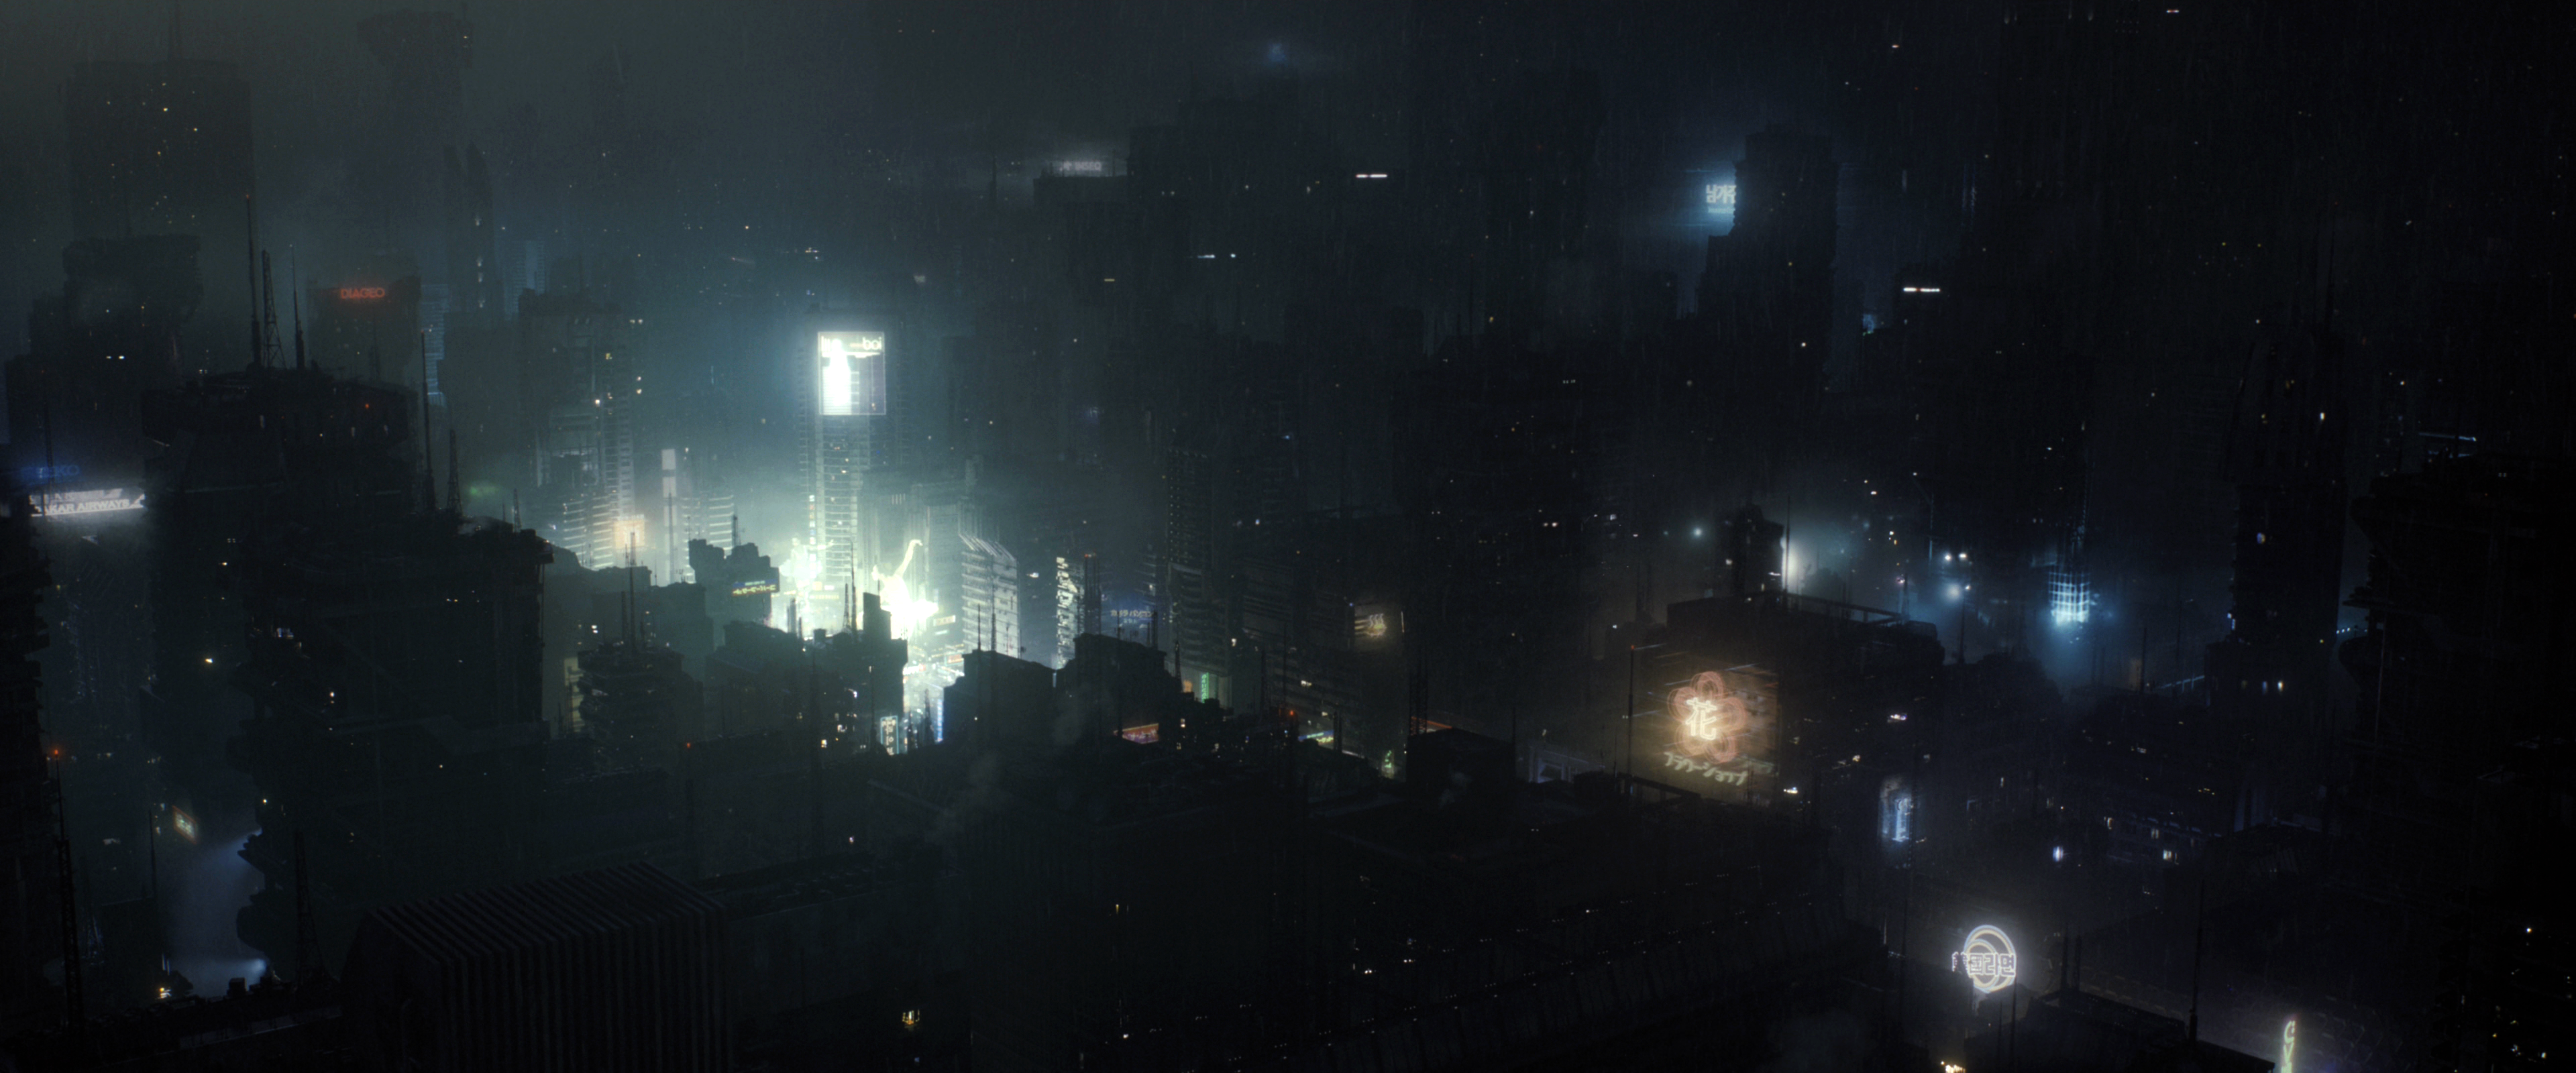 Bladerunner Blade Runner 2049 Cyberpunk Movies Dark Futuristic City Cityscape Night 2017 Year 3840x1600